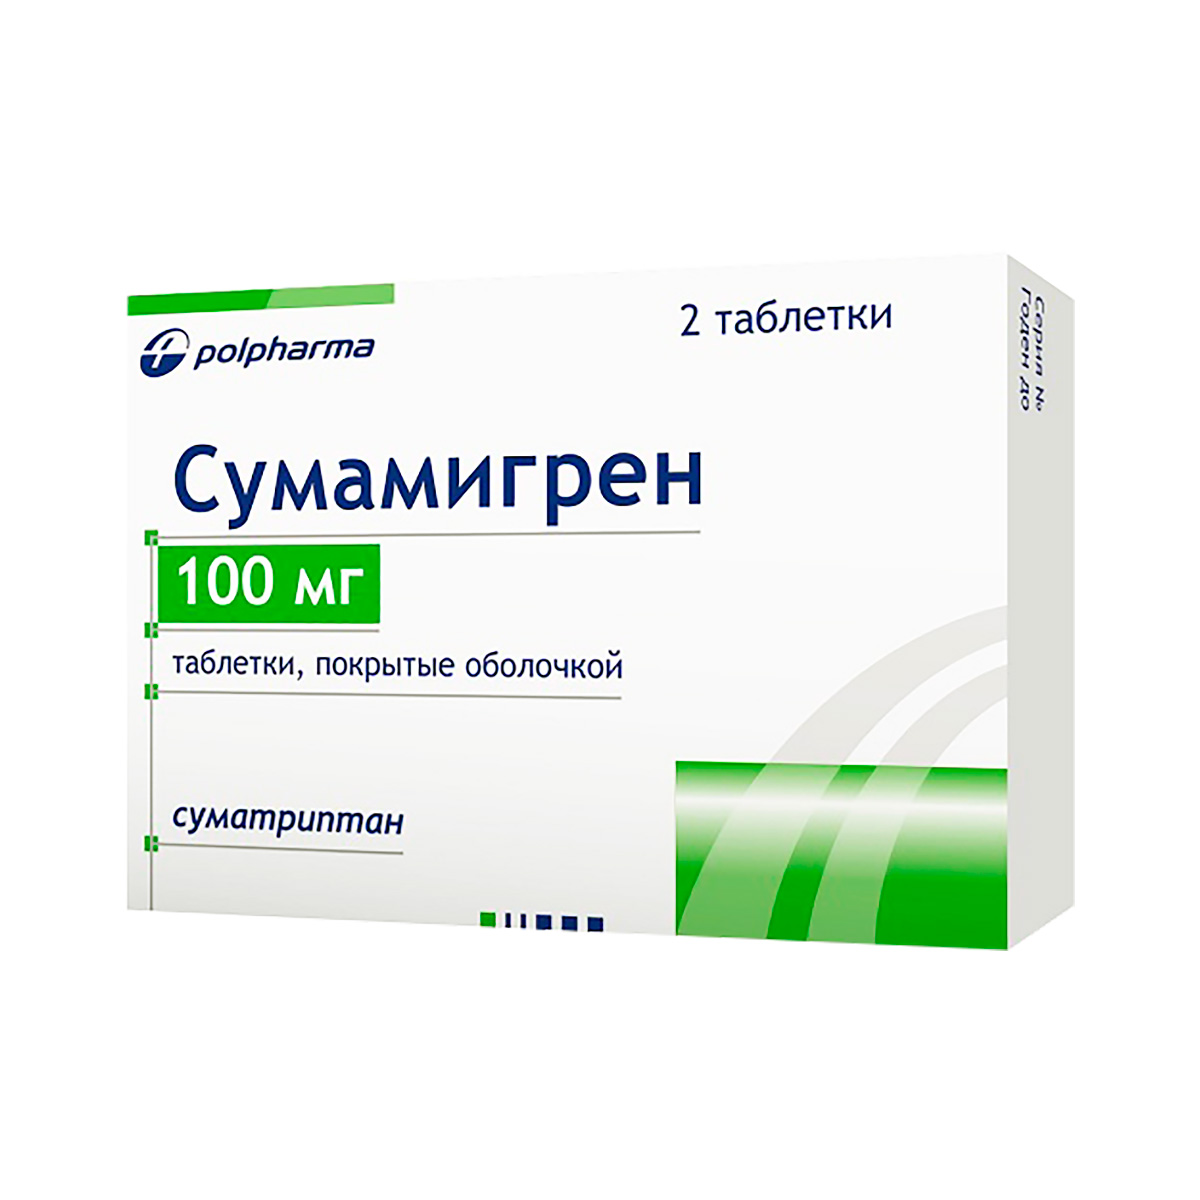 Сумамигрен 100 мг таблетки покрытые оболочкой 2 шт